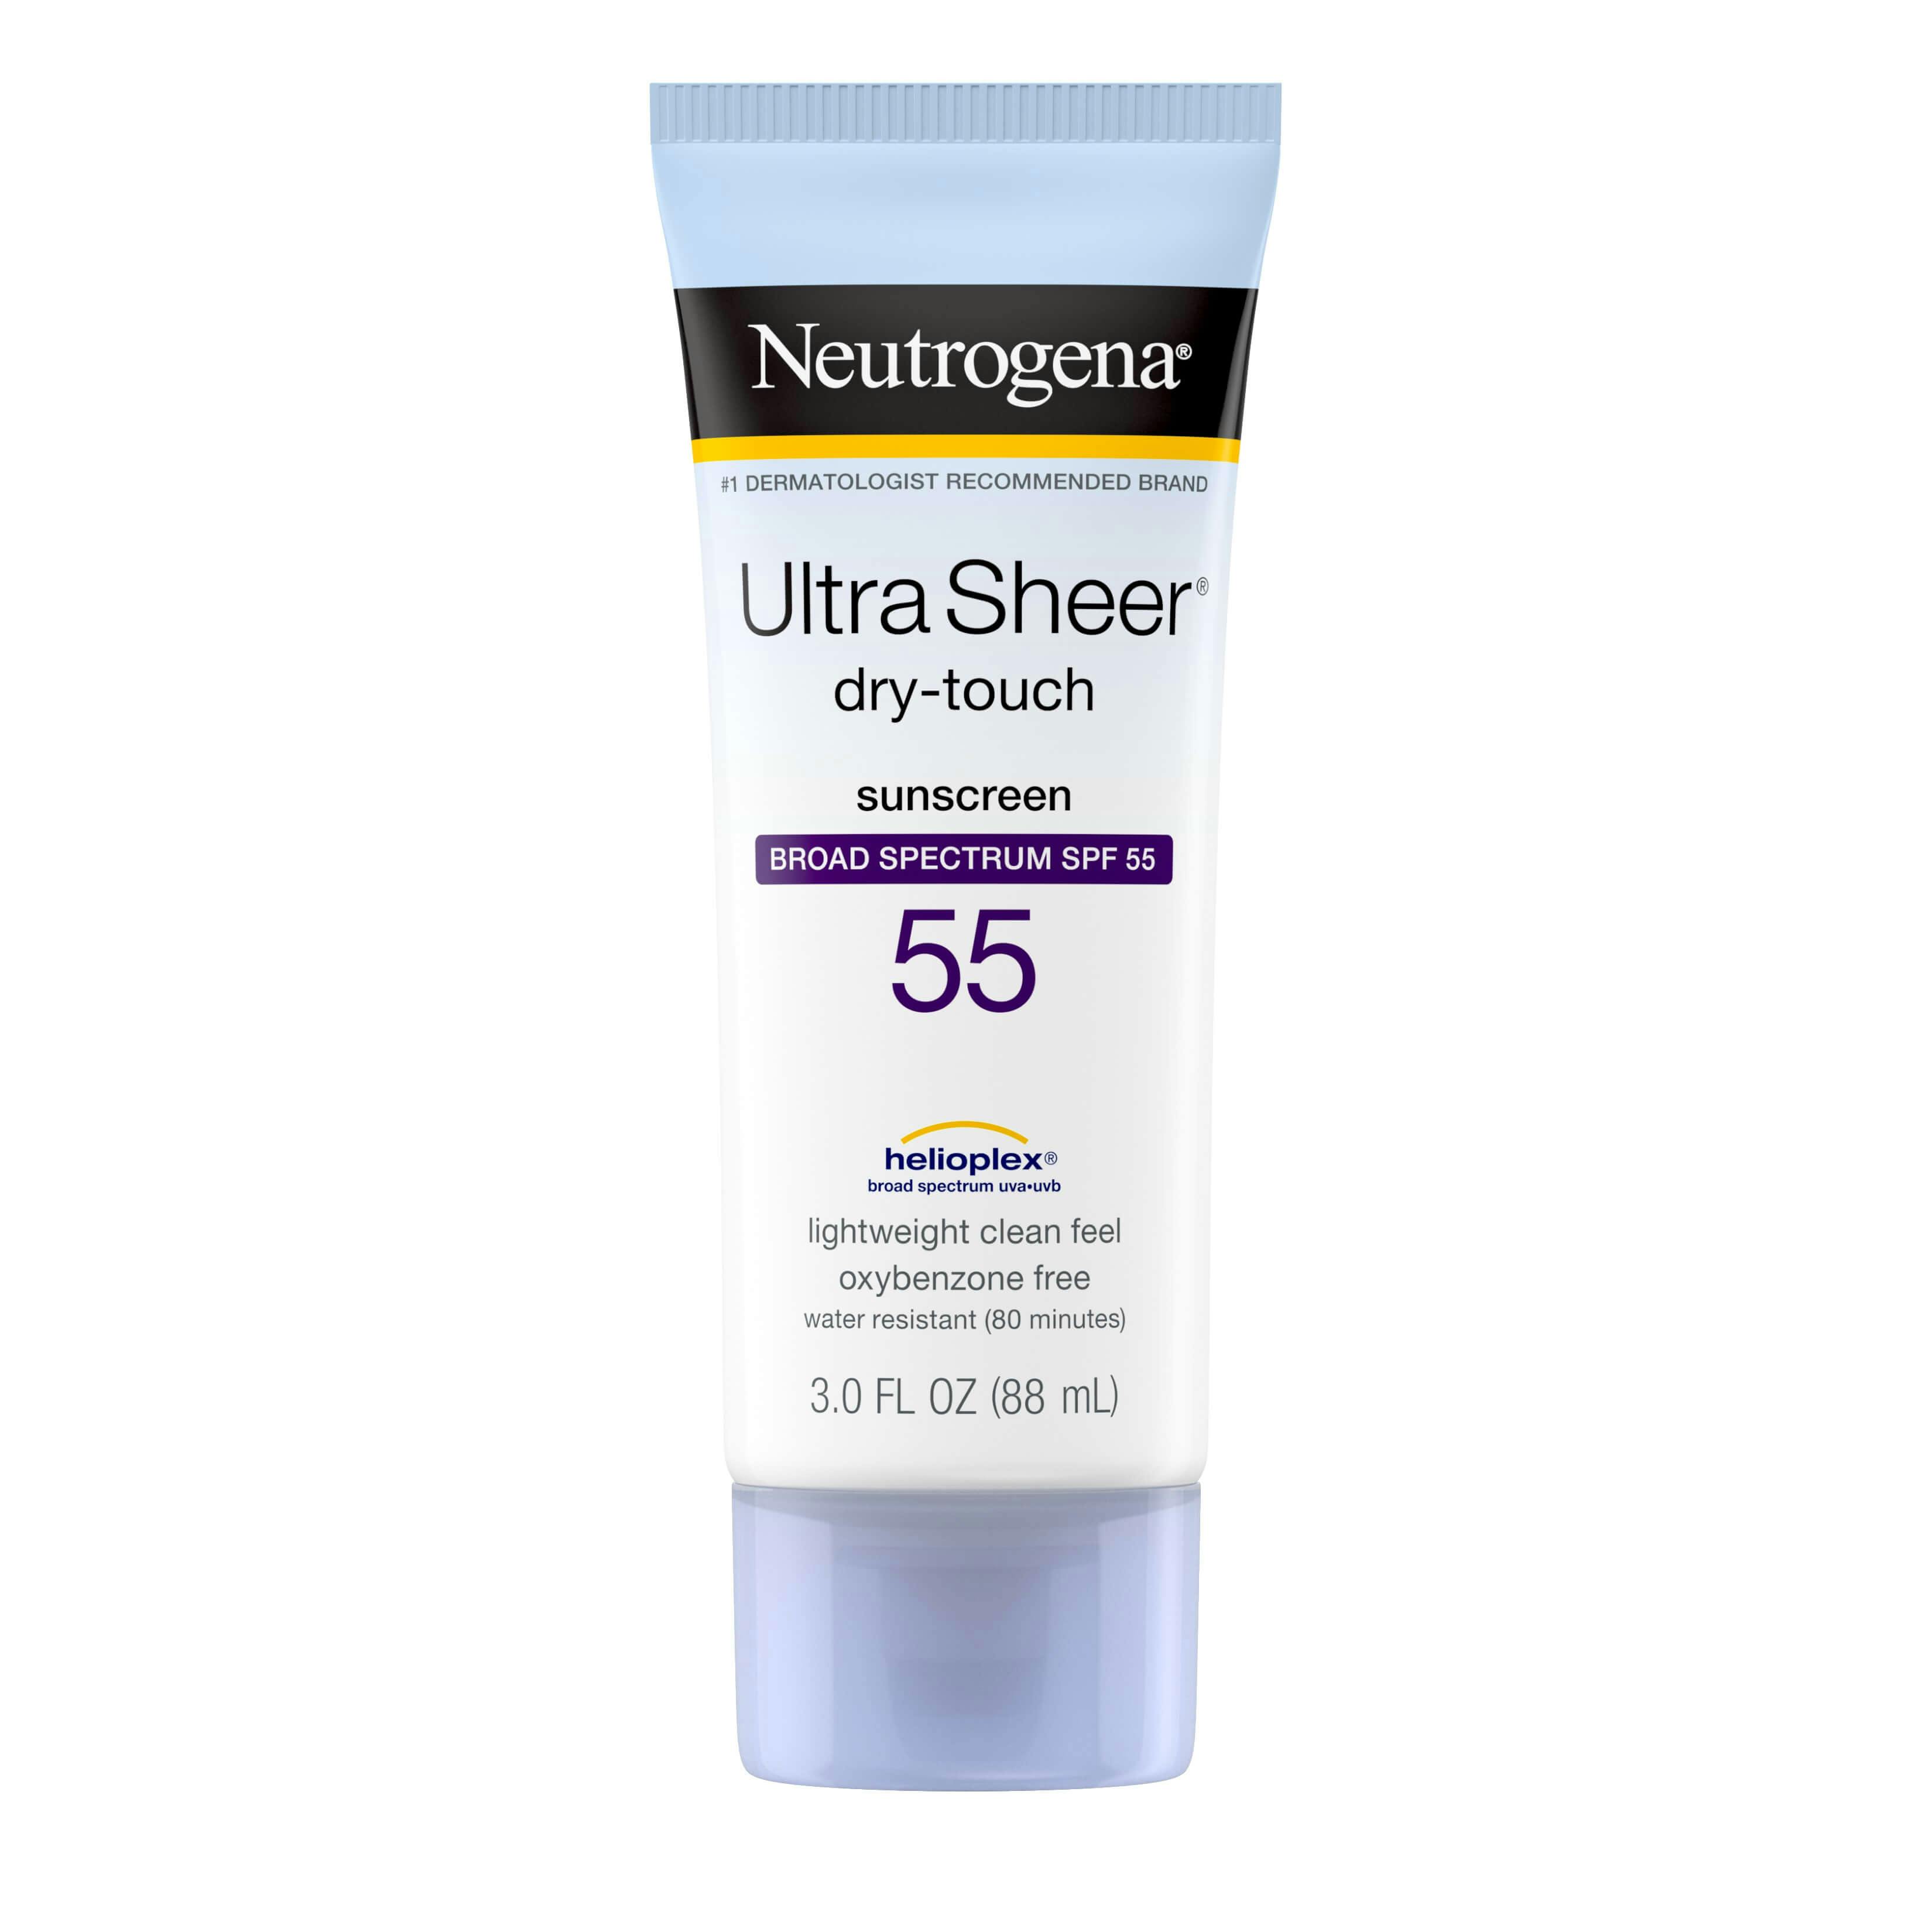 neutrogena sunscreen recall